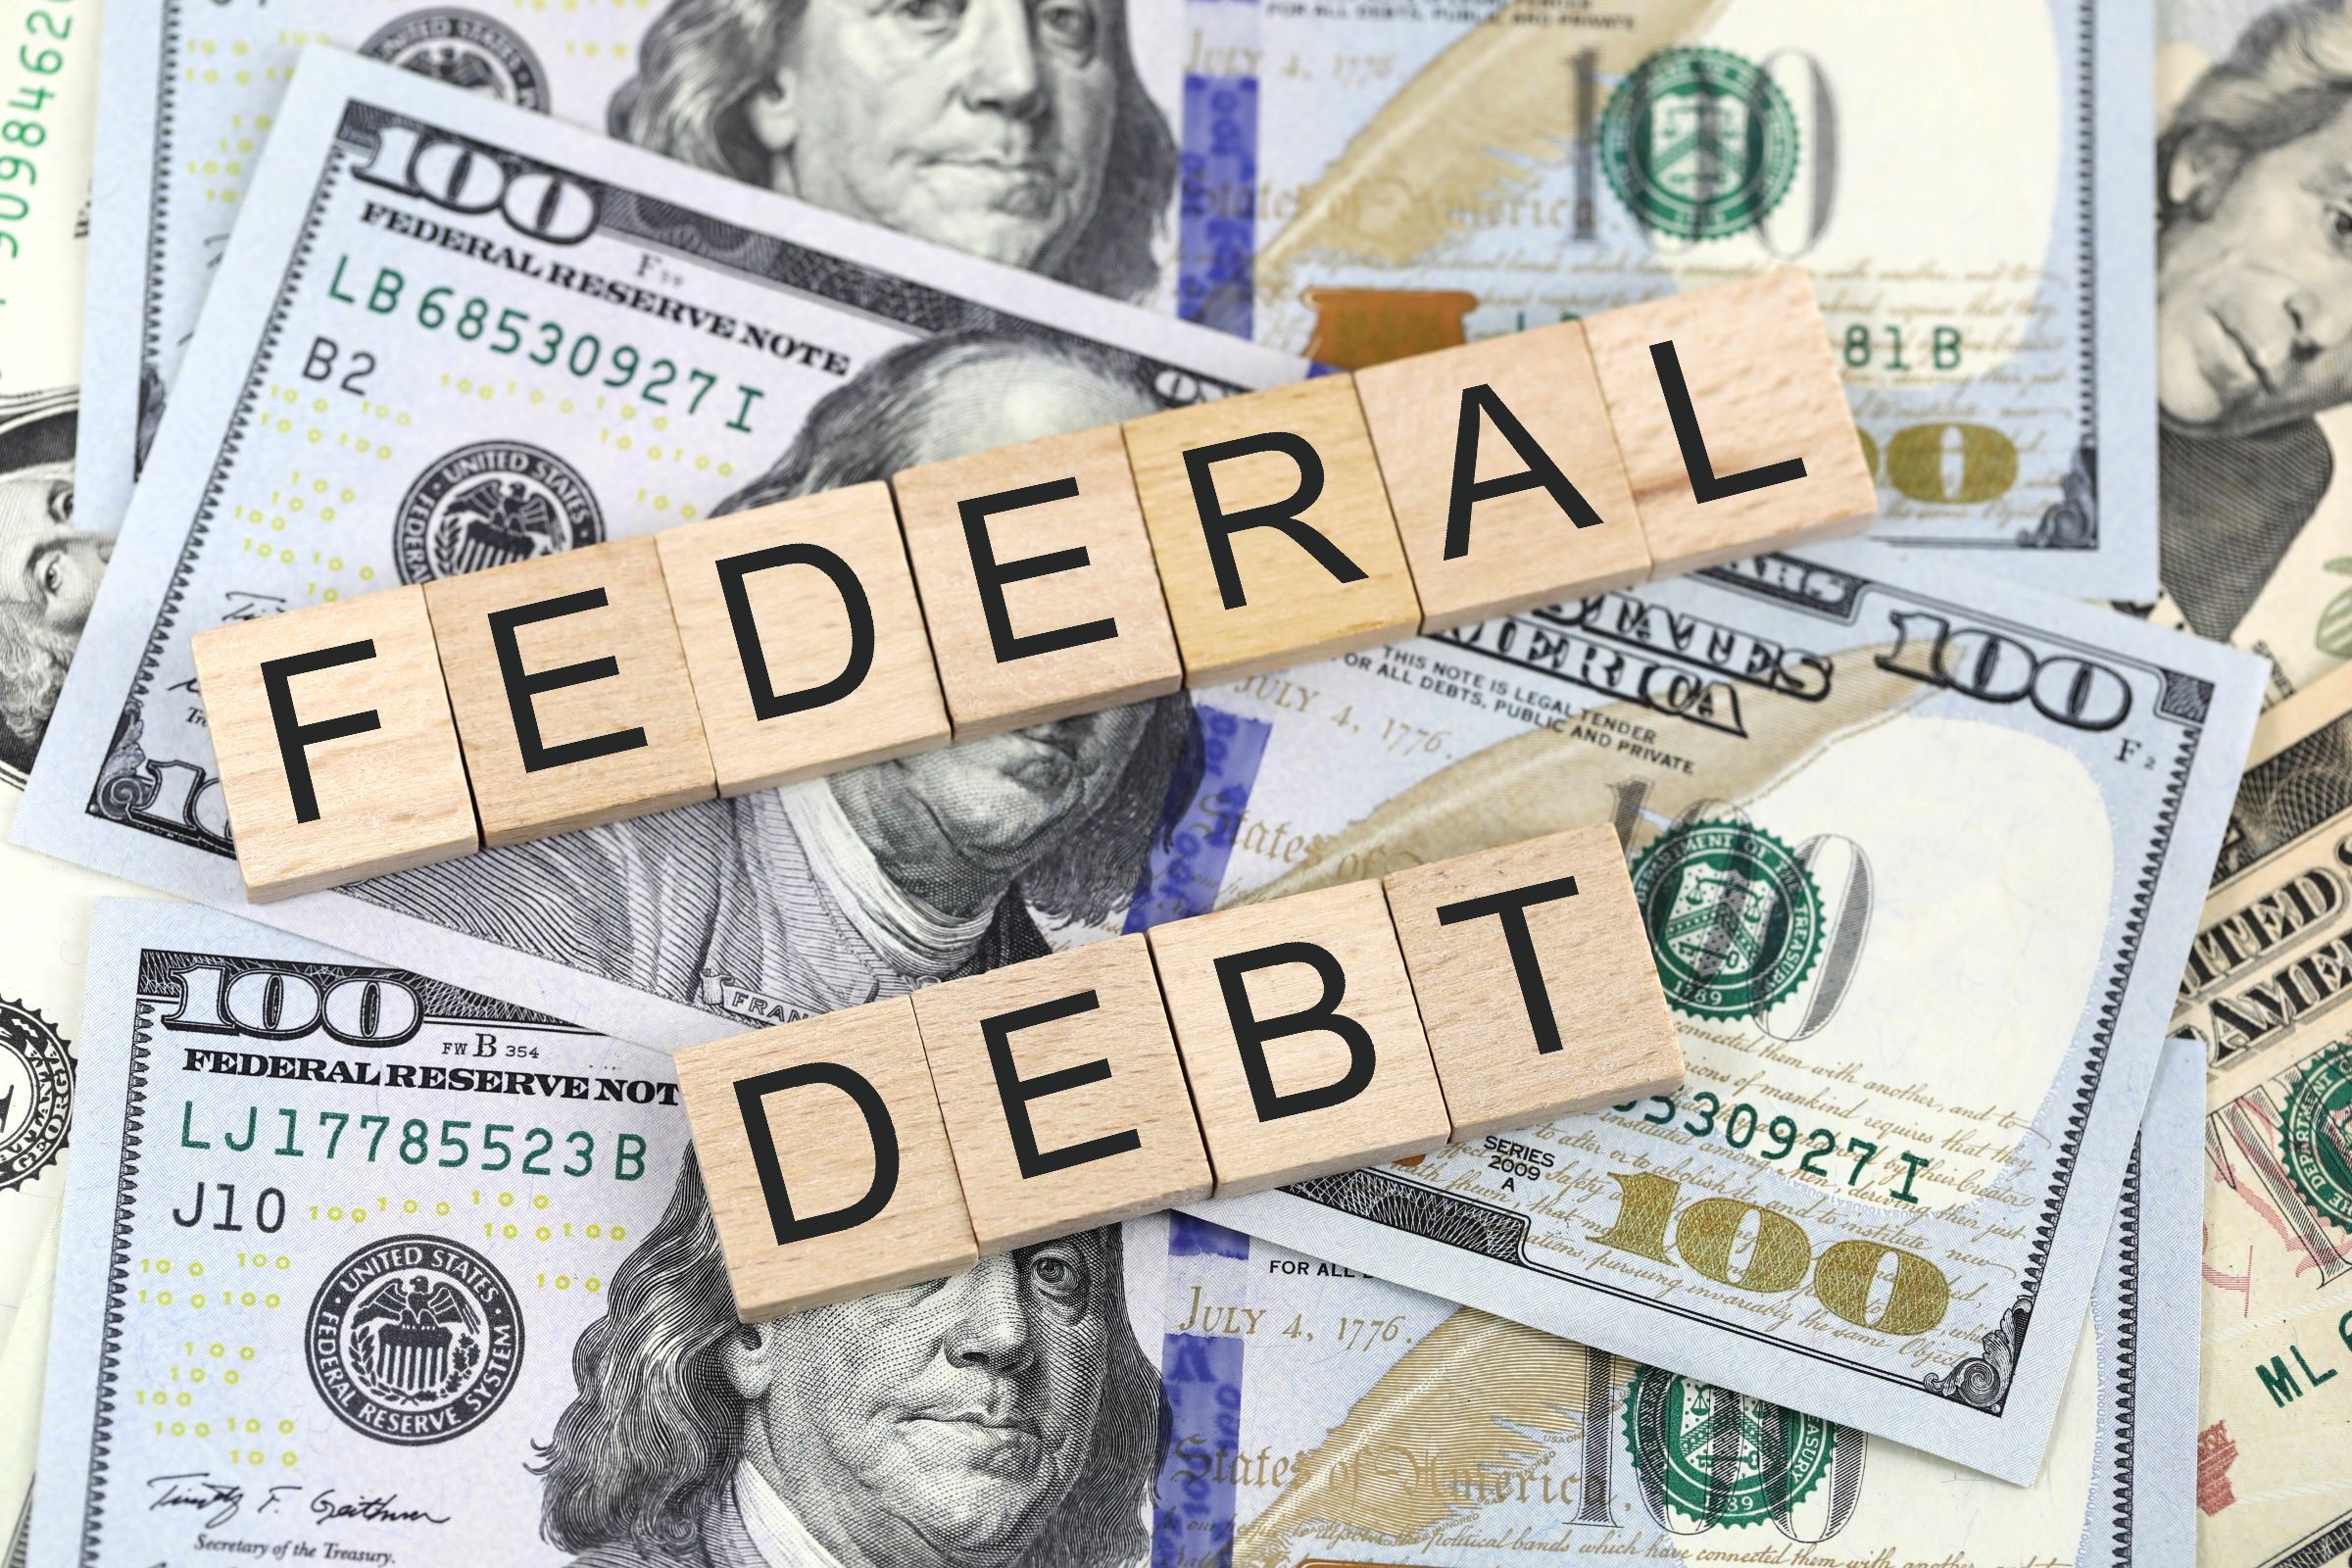 federal debt